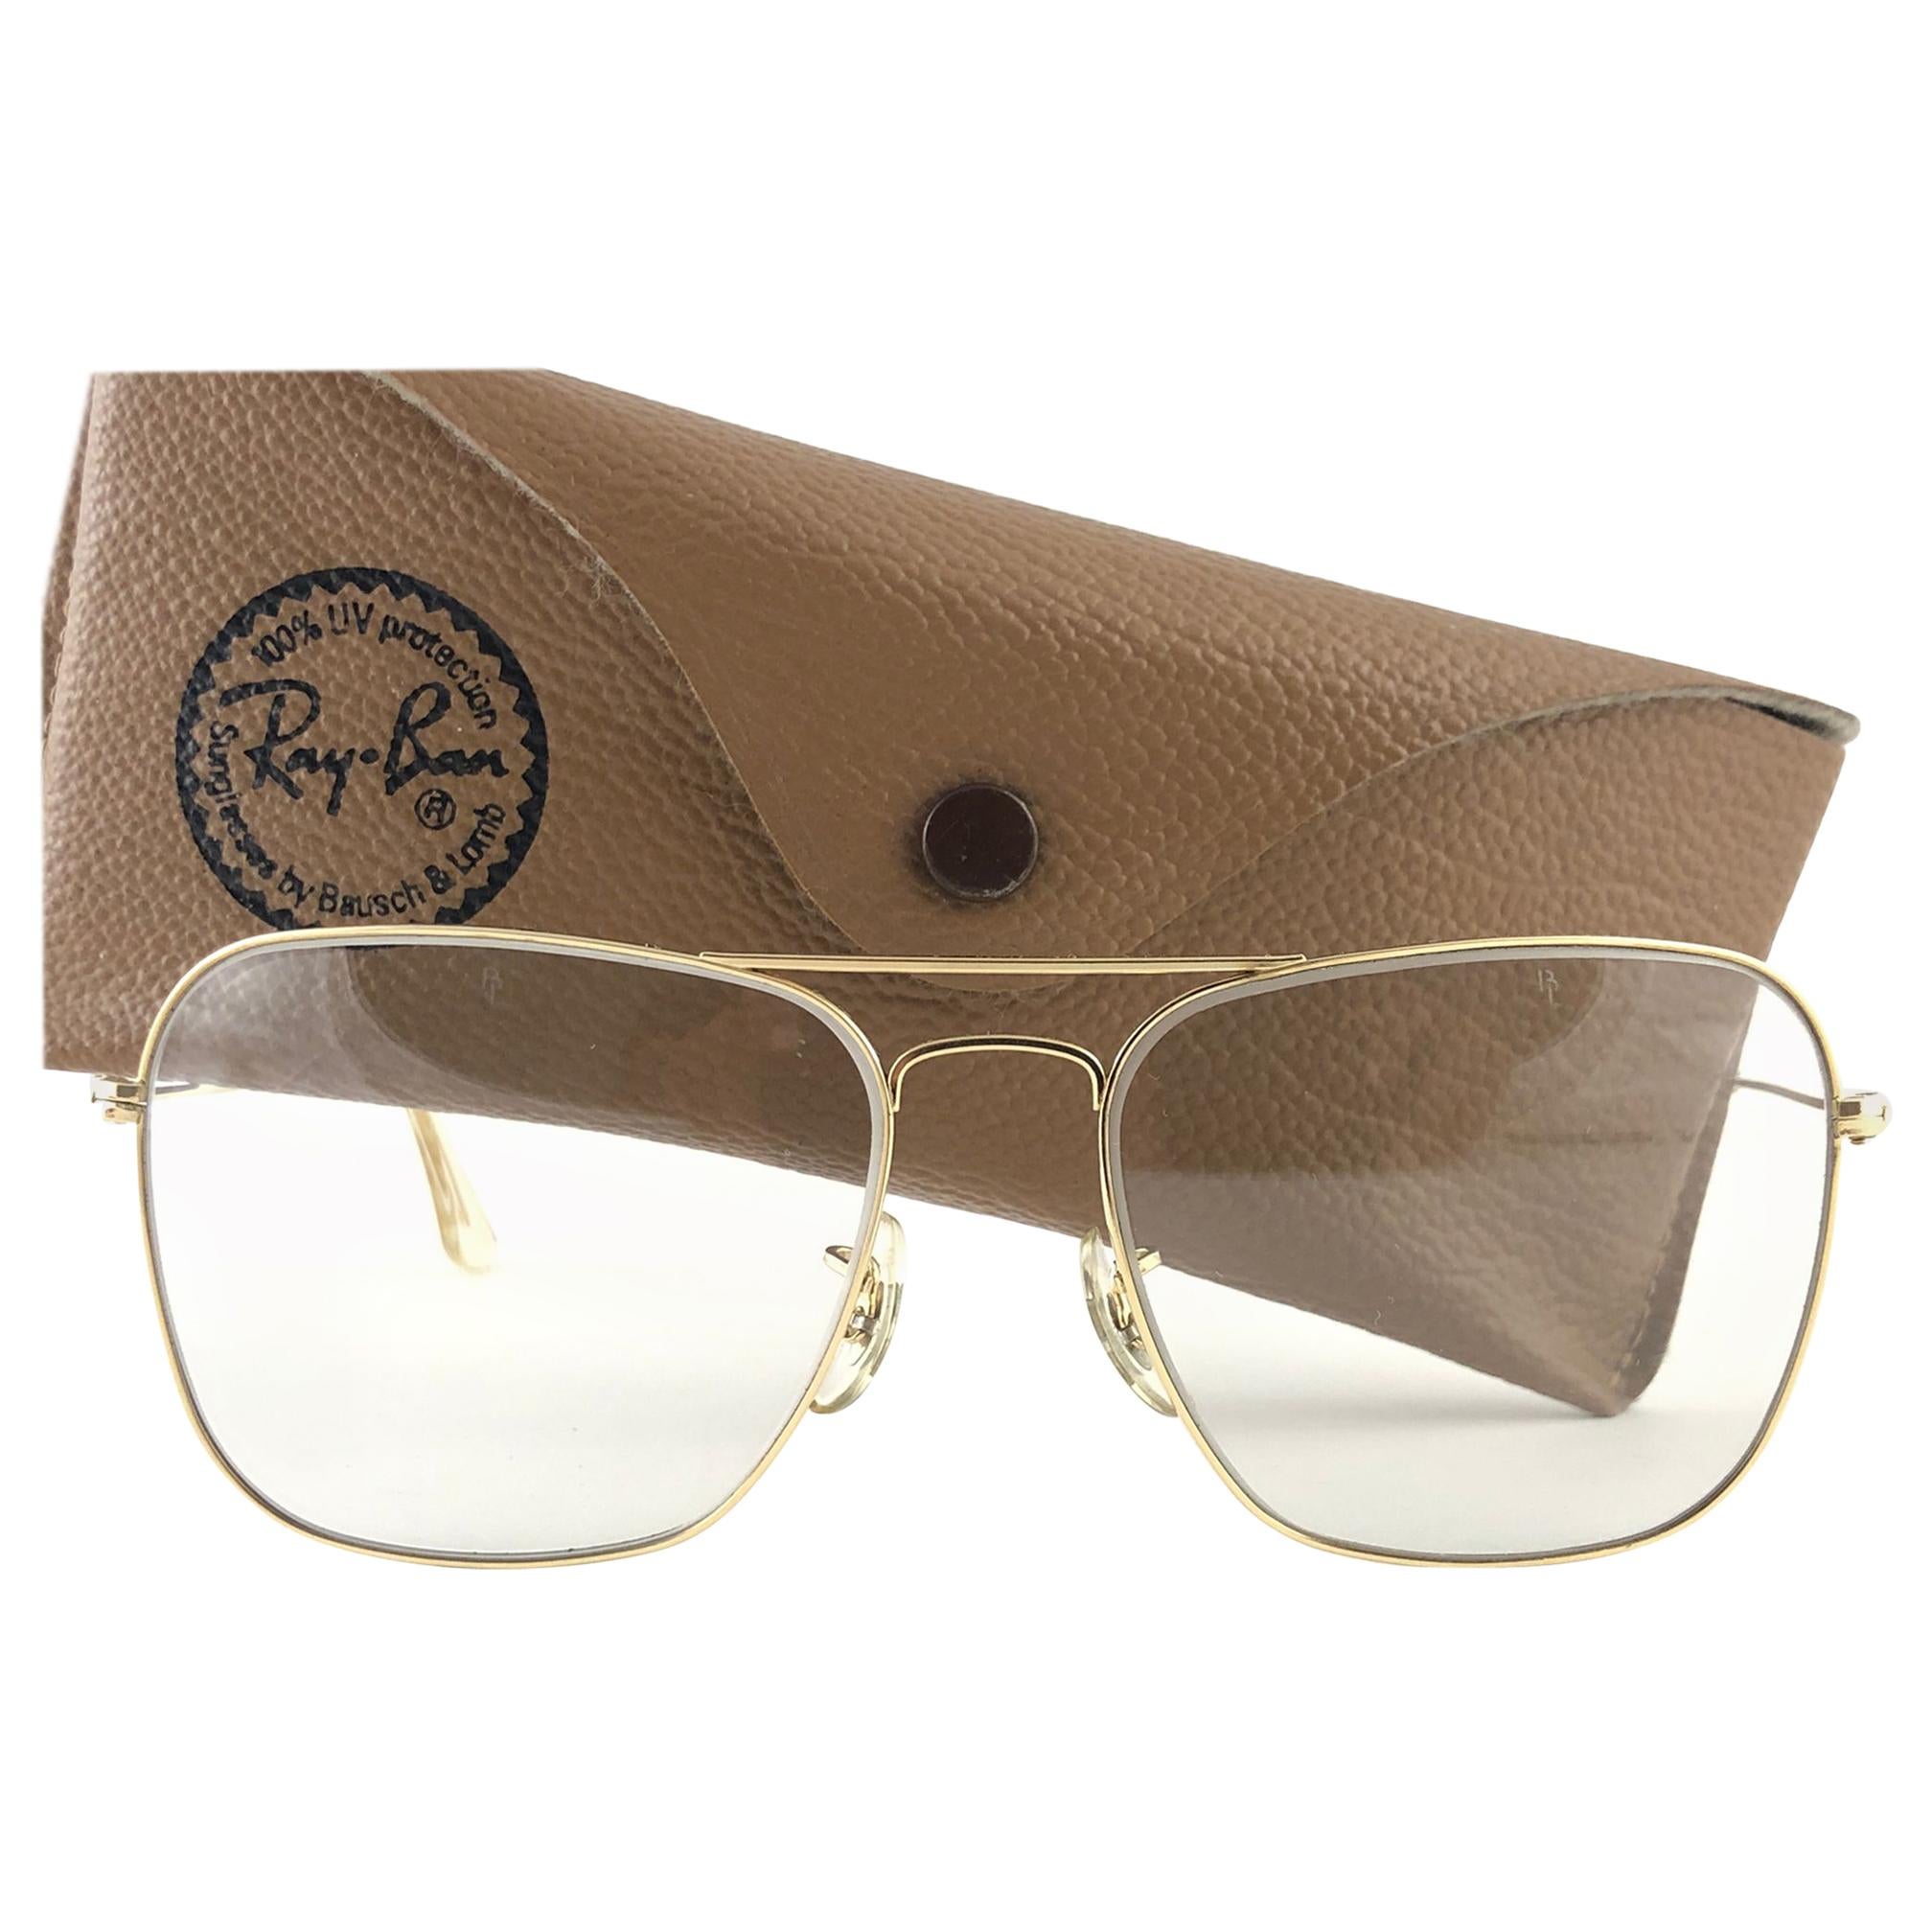 New Vintage Ray Ban Caravan Gold Changeable Lenses 1970's B&L Sunglasses